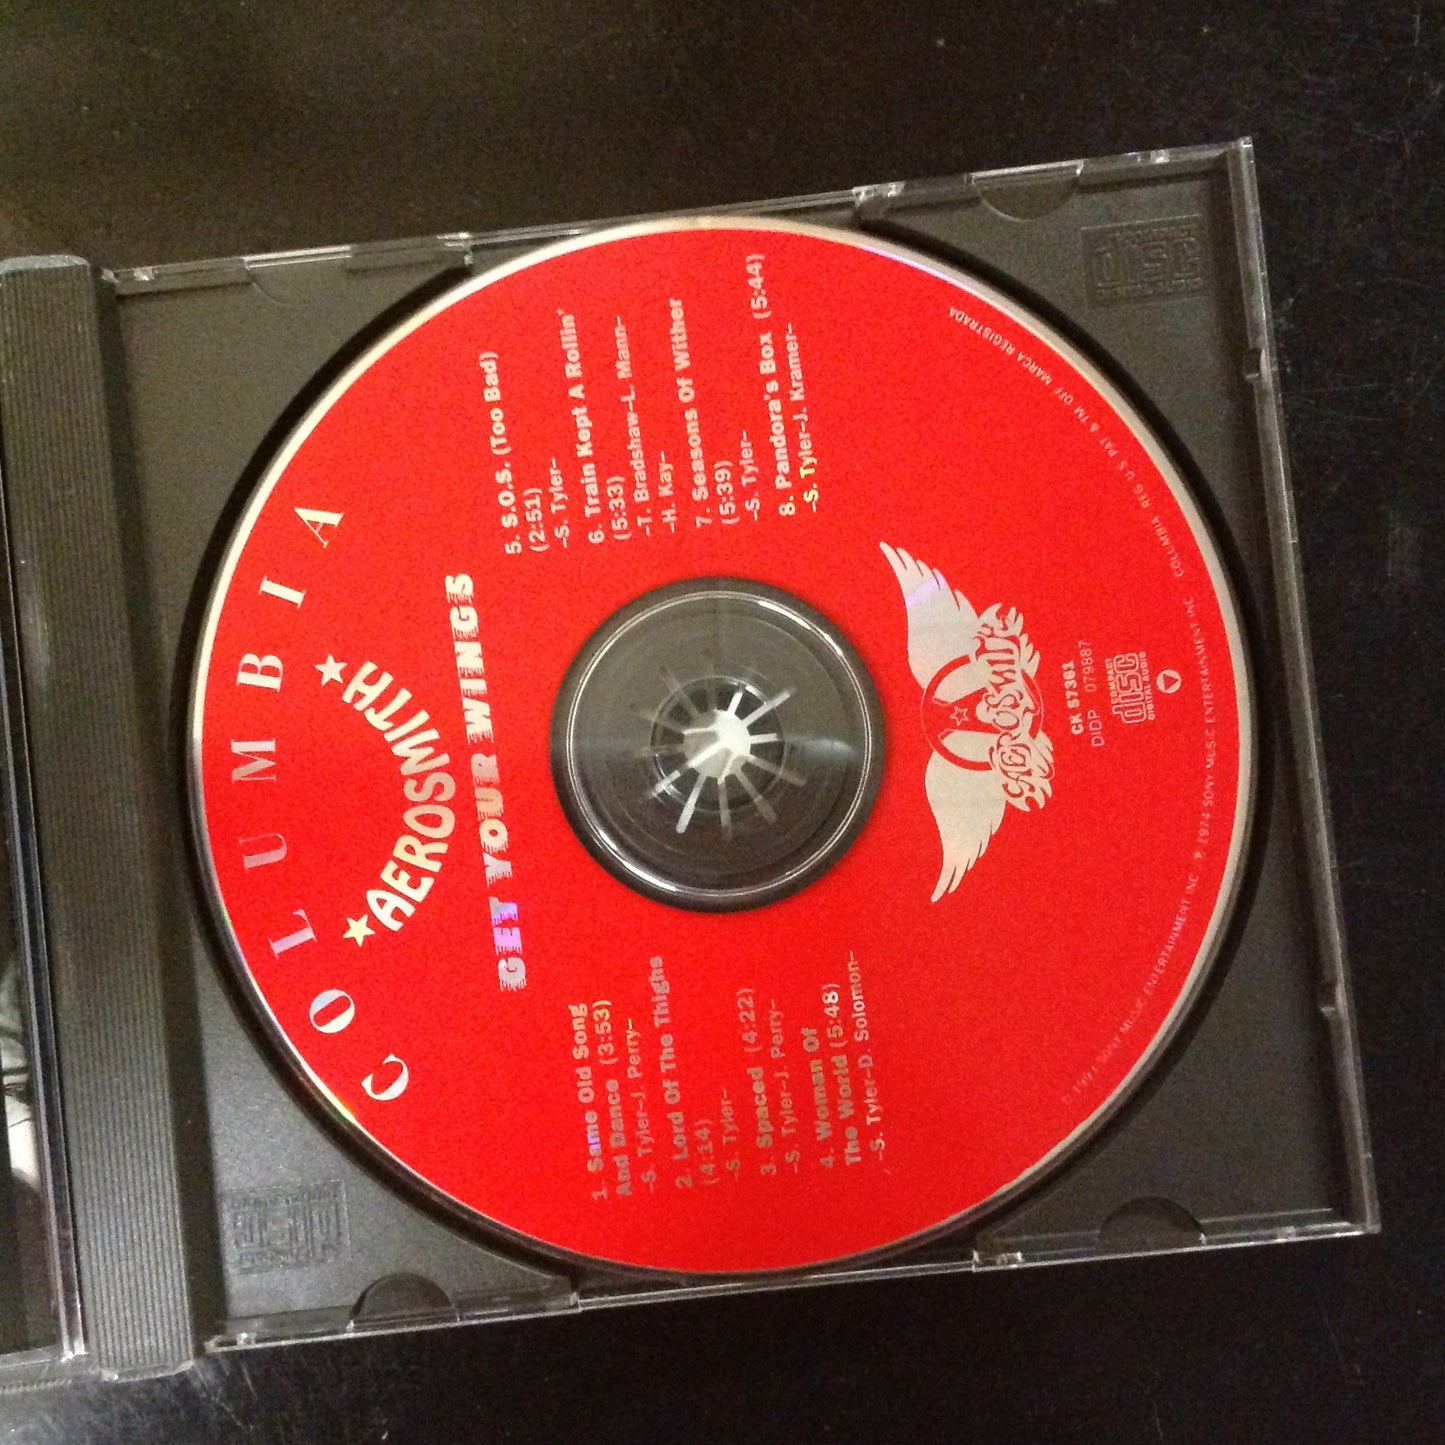 CD Aerosmith Get Your Wings CK57361 Columbia Rock N Roll Arena